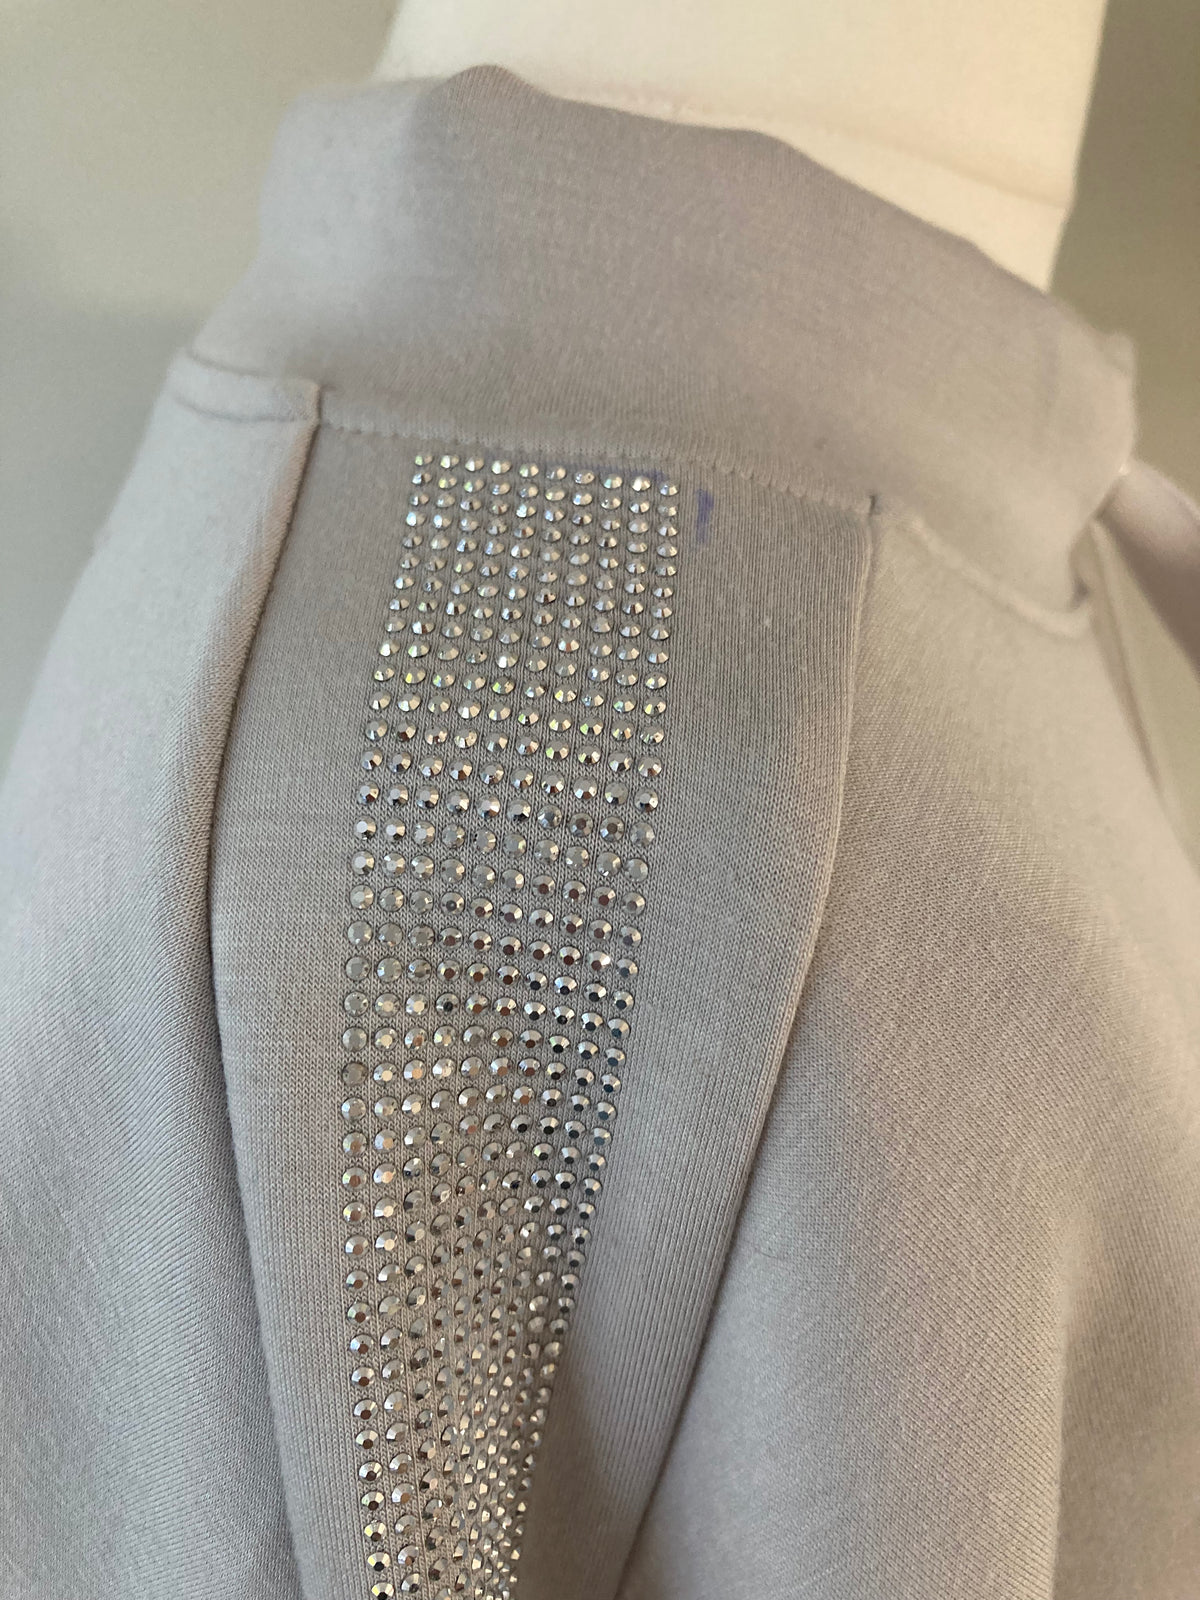 Soft Grey jumper by RICK CARDONA- Size 14